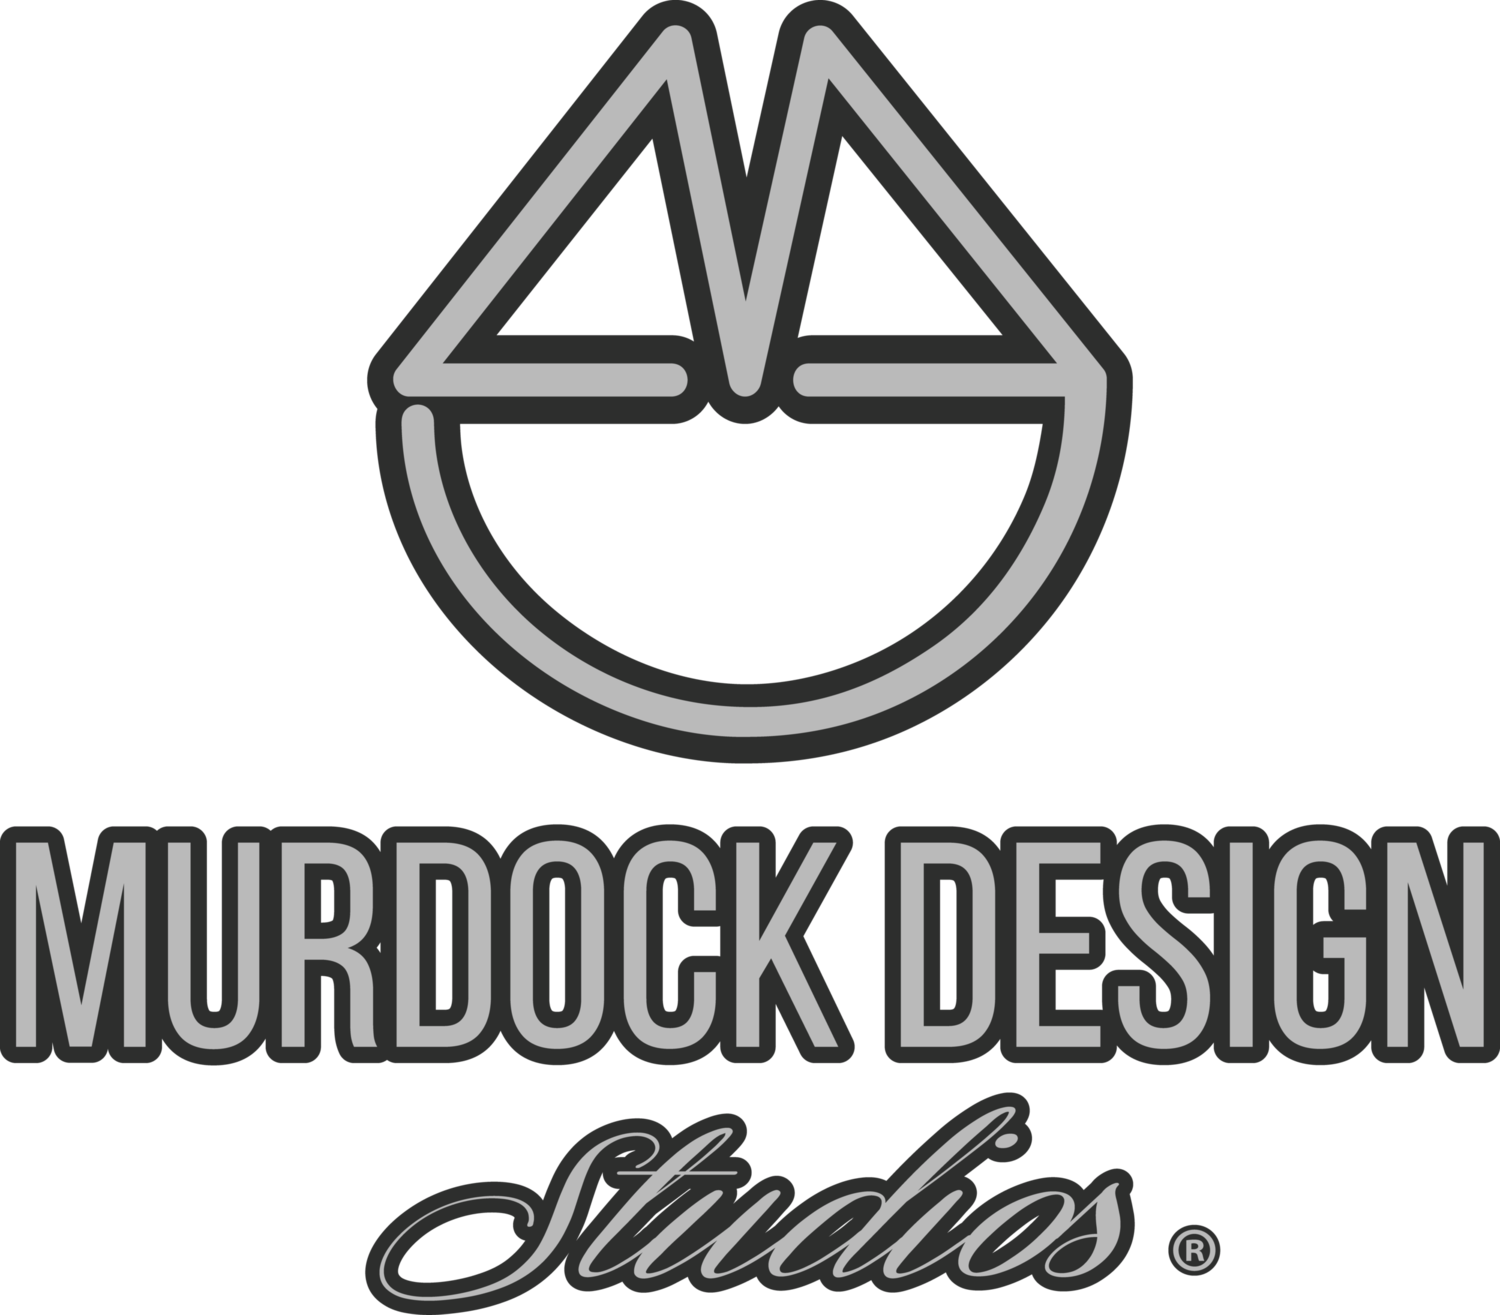 Murdock Design Studios